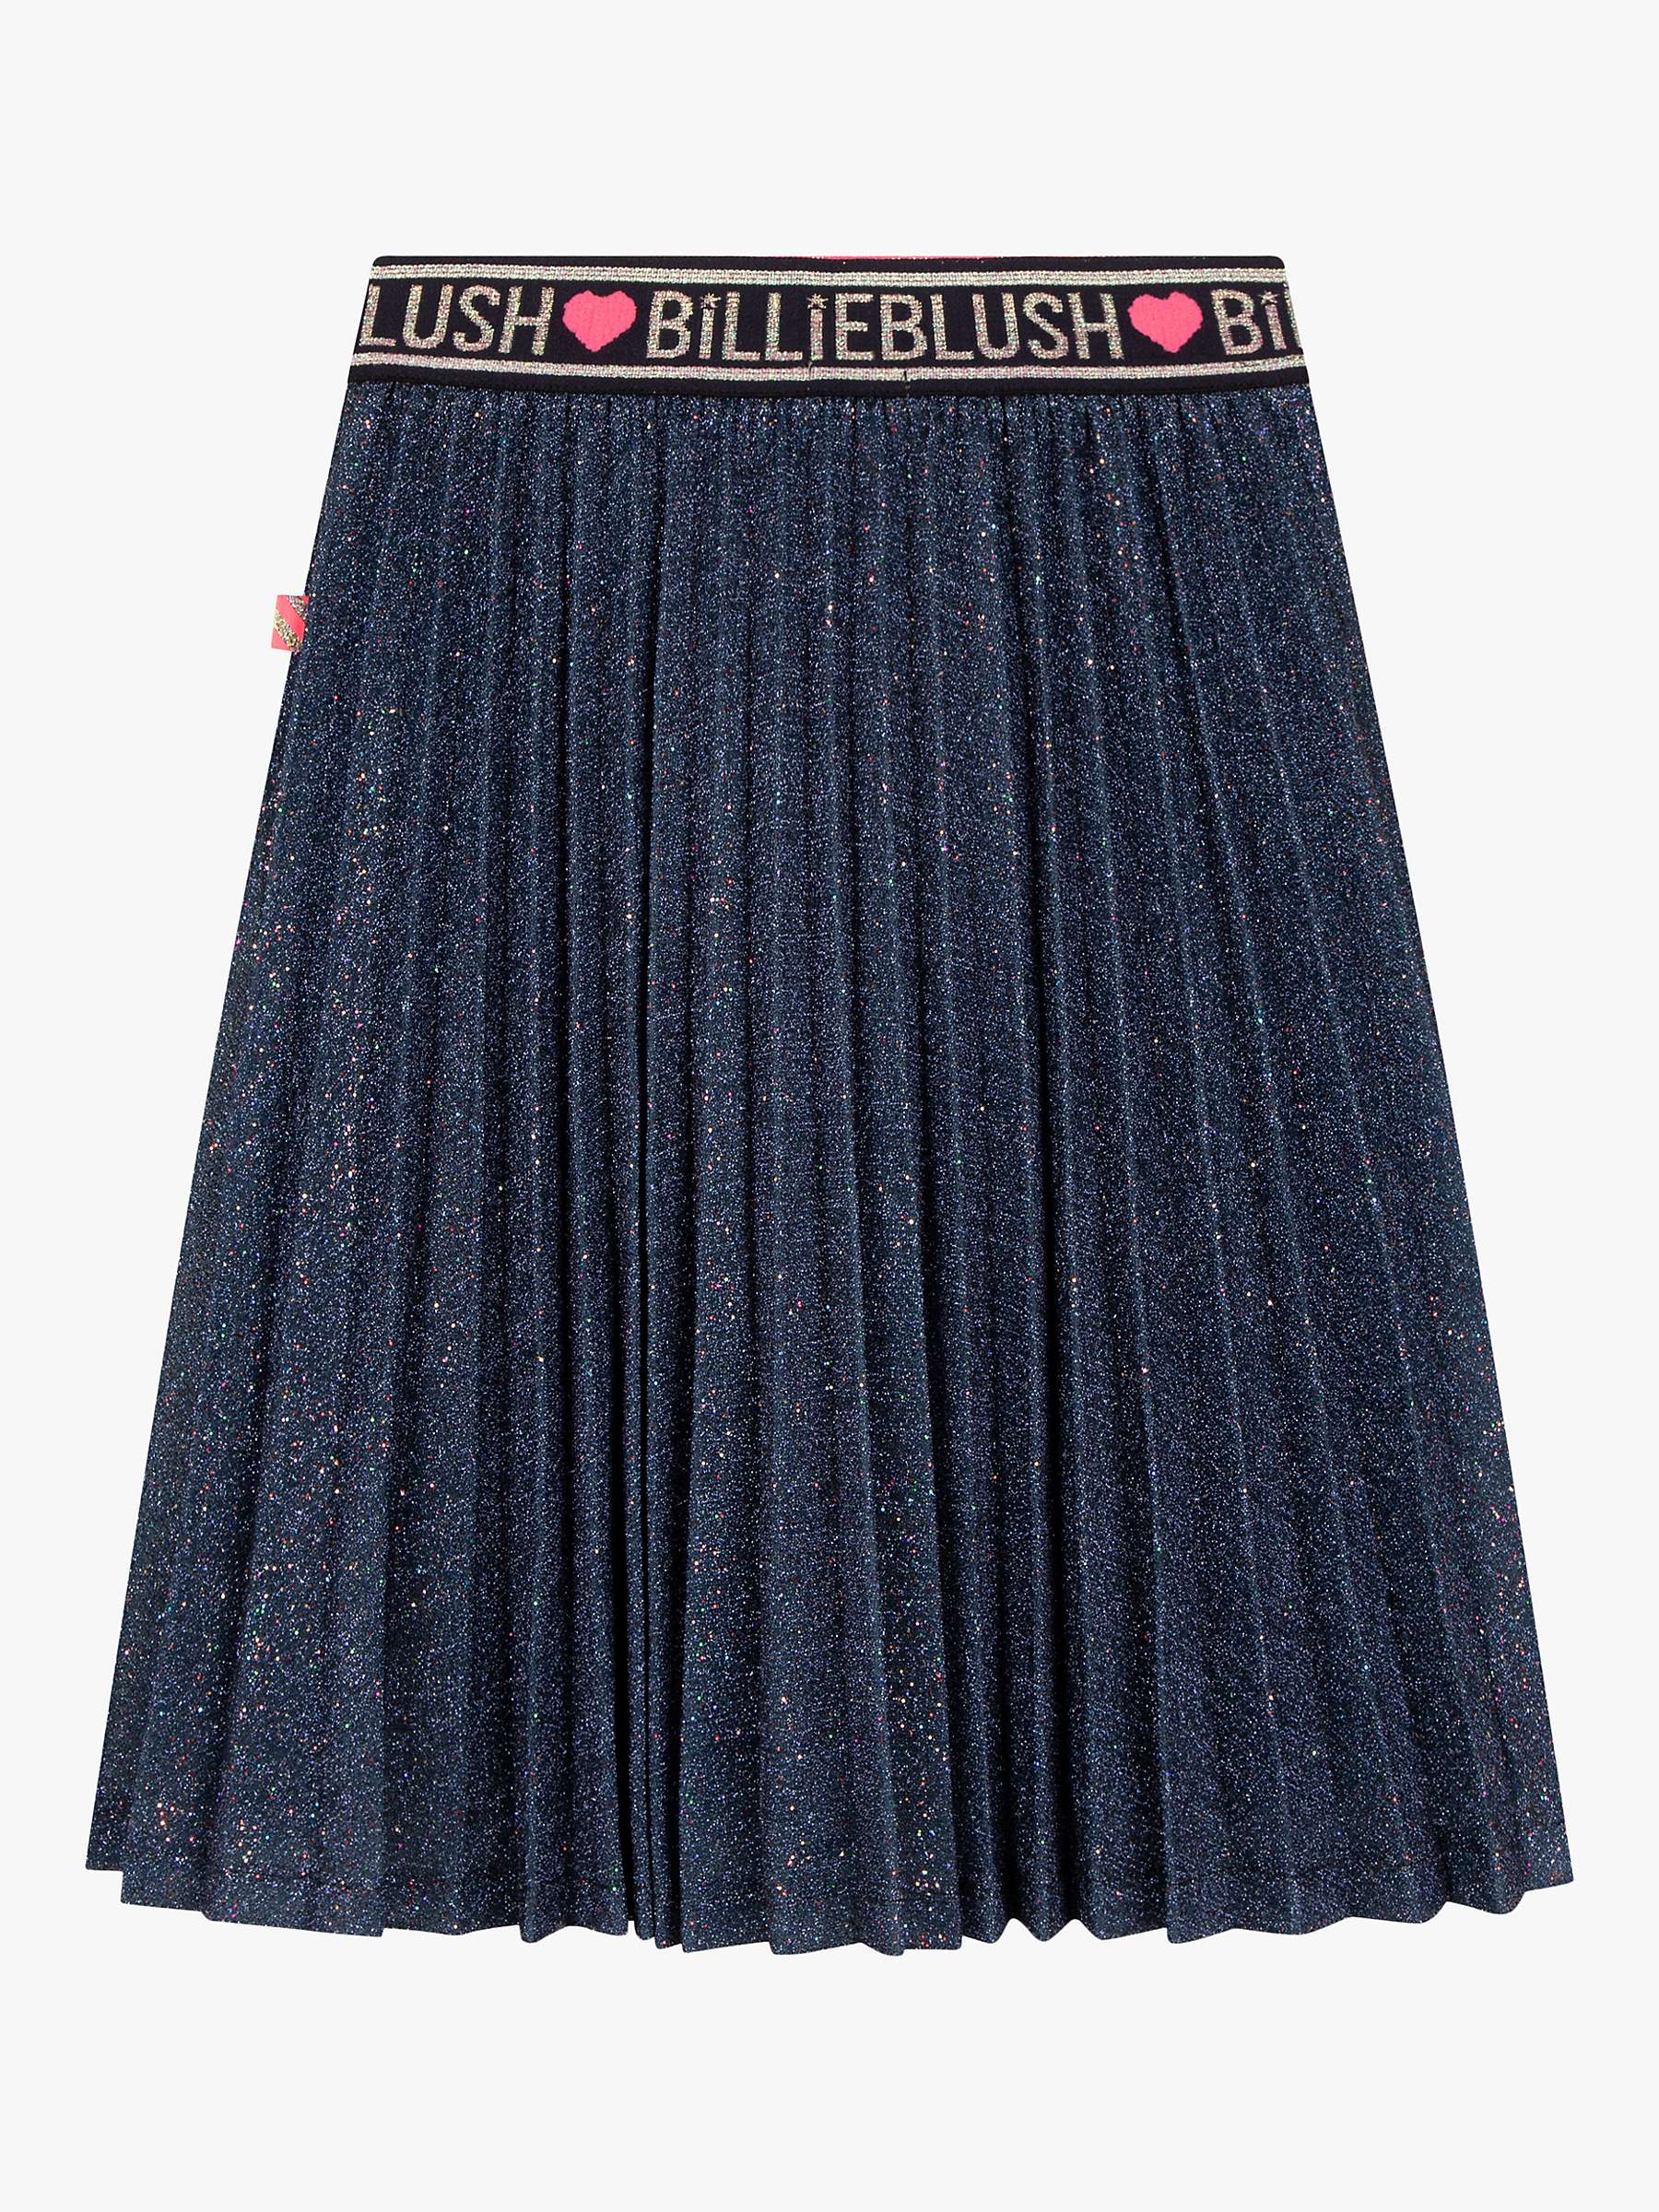 Buy Billieblush Kids' Pleated Metallic Skirt Online at johnlewis.com